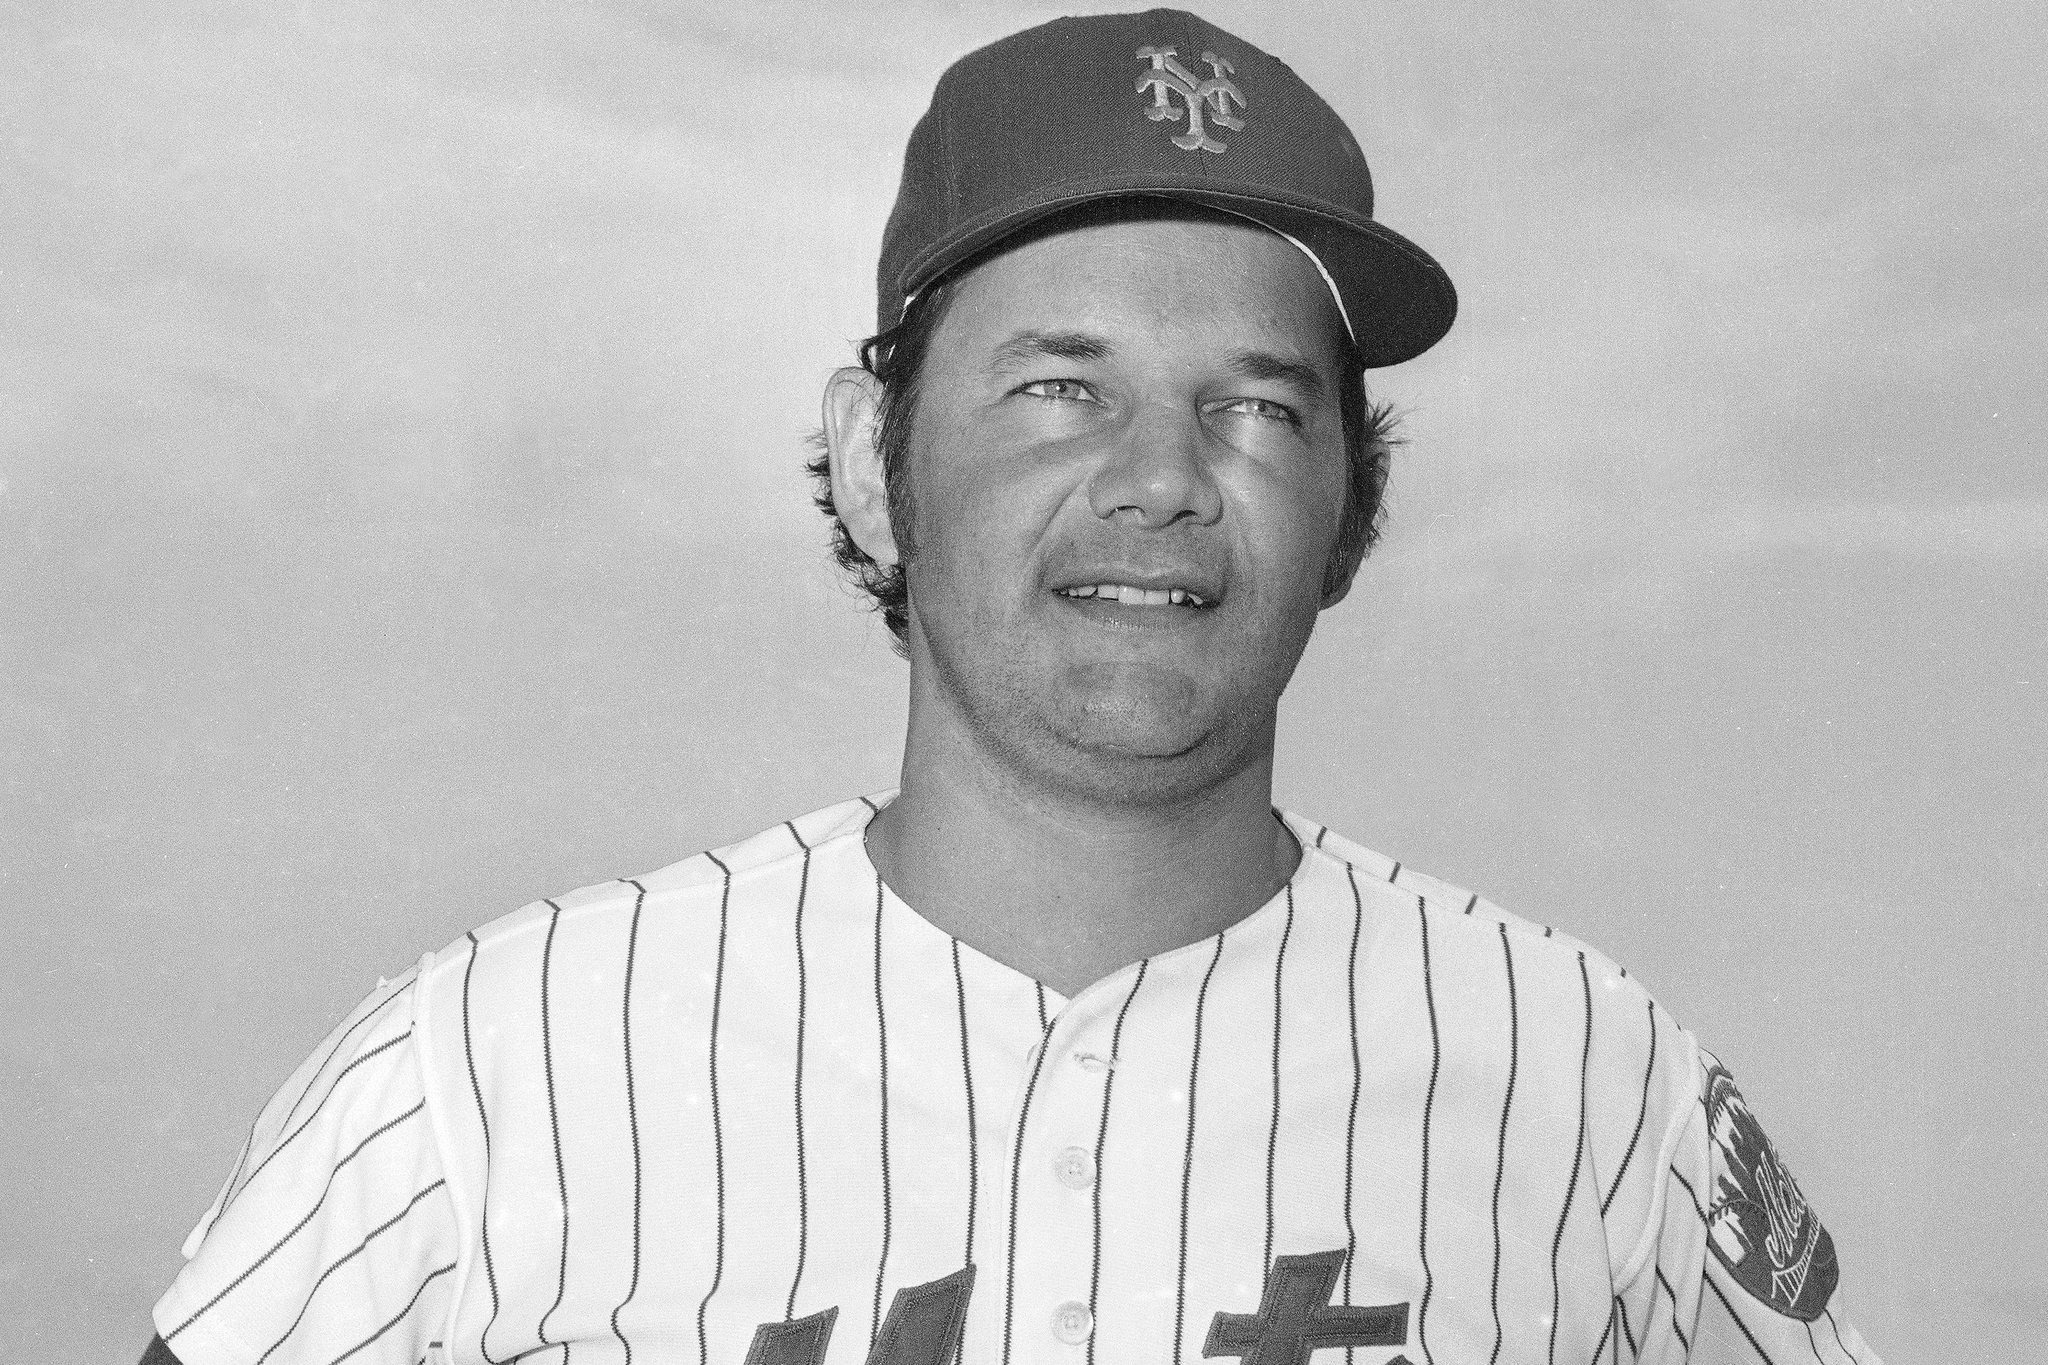 Former New York Mets catcher Ron Hodges